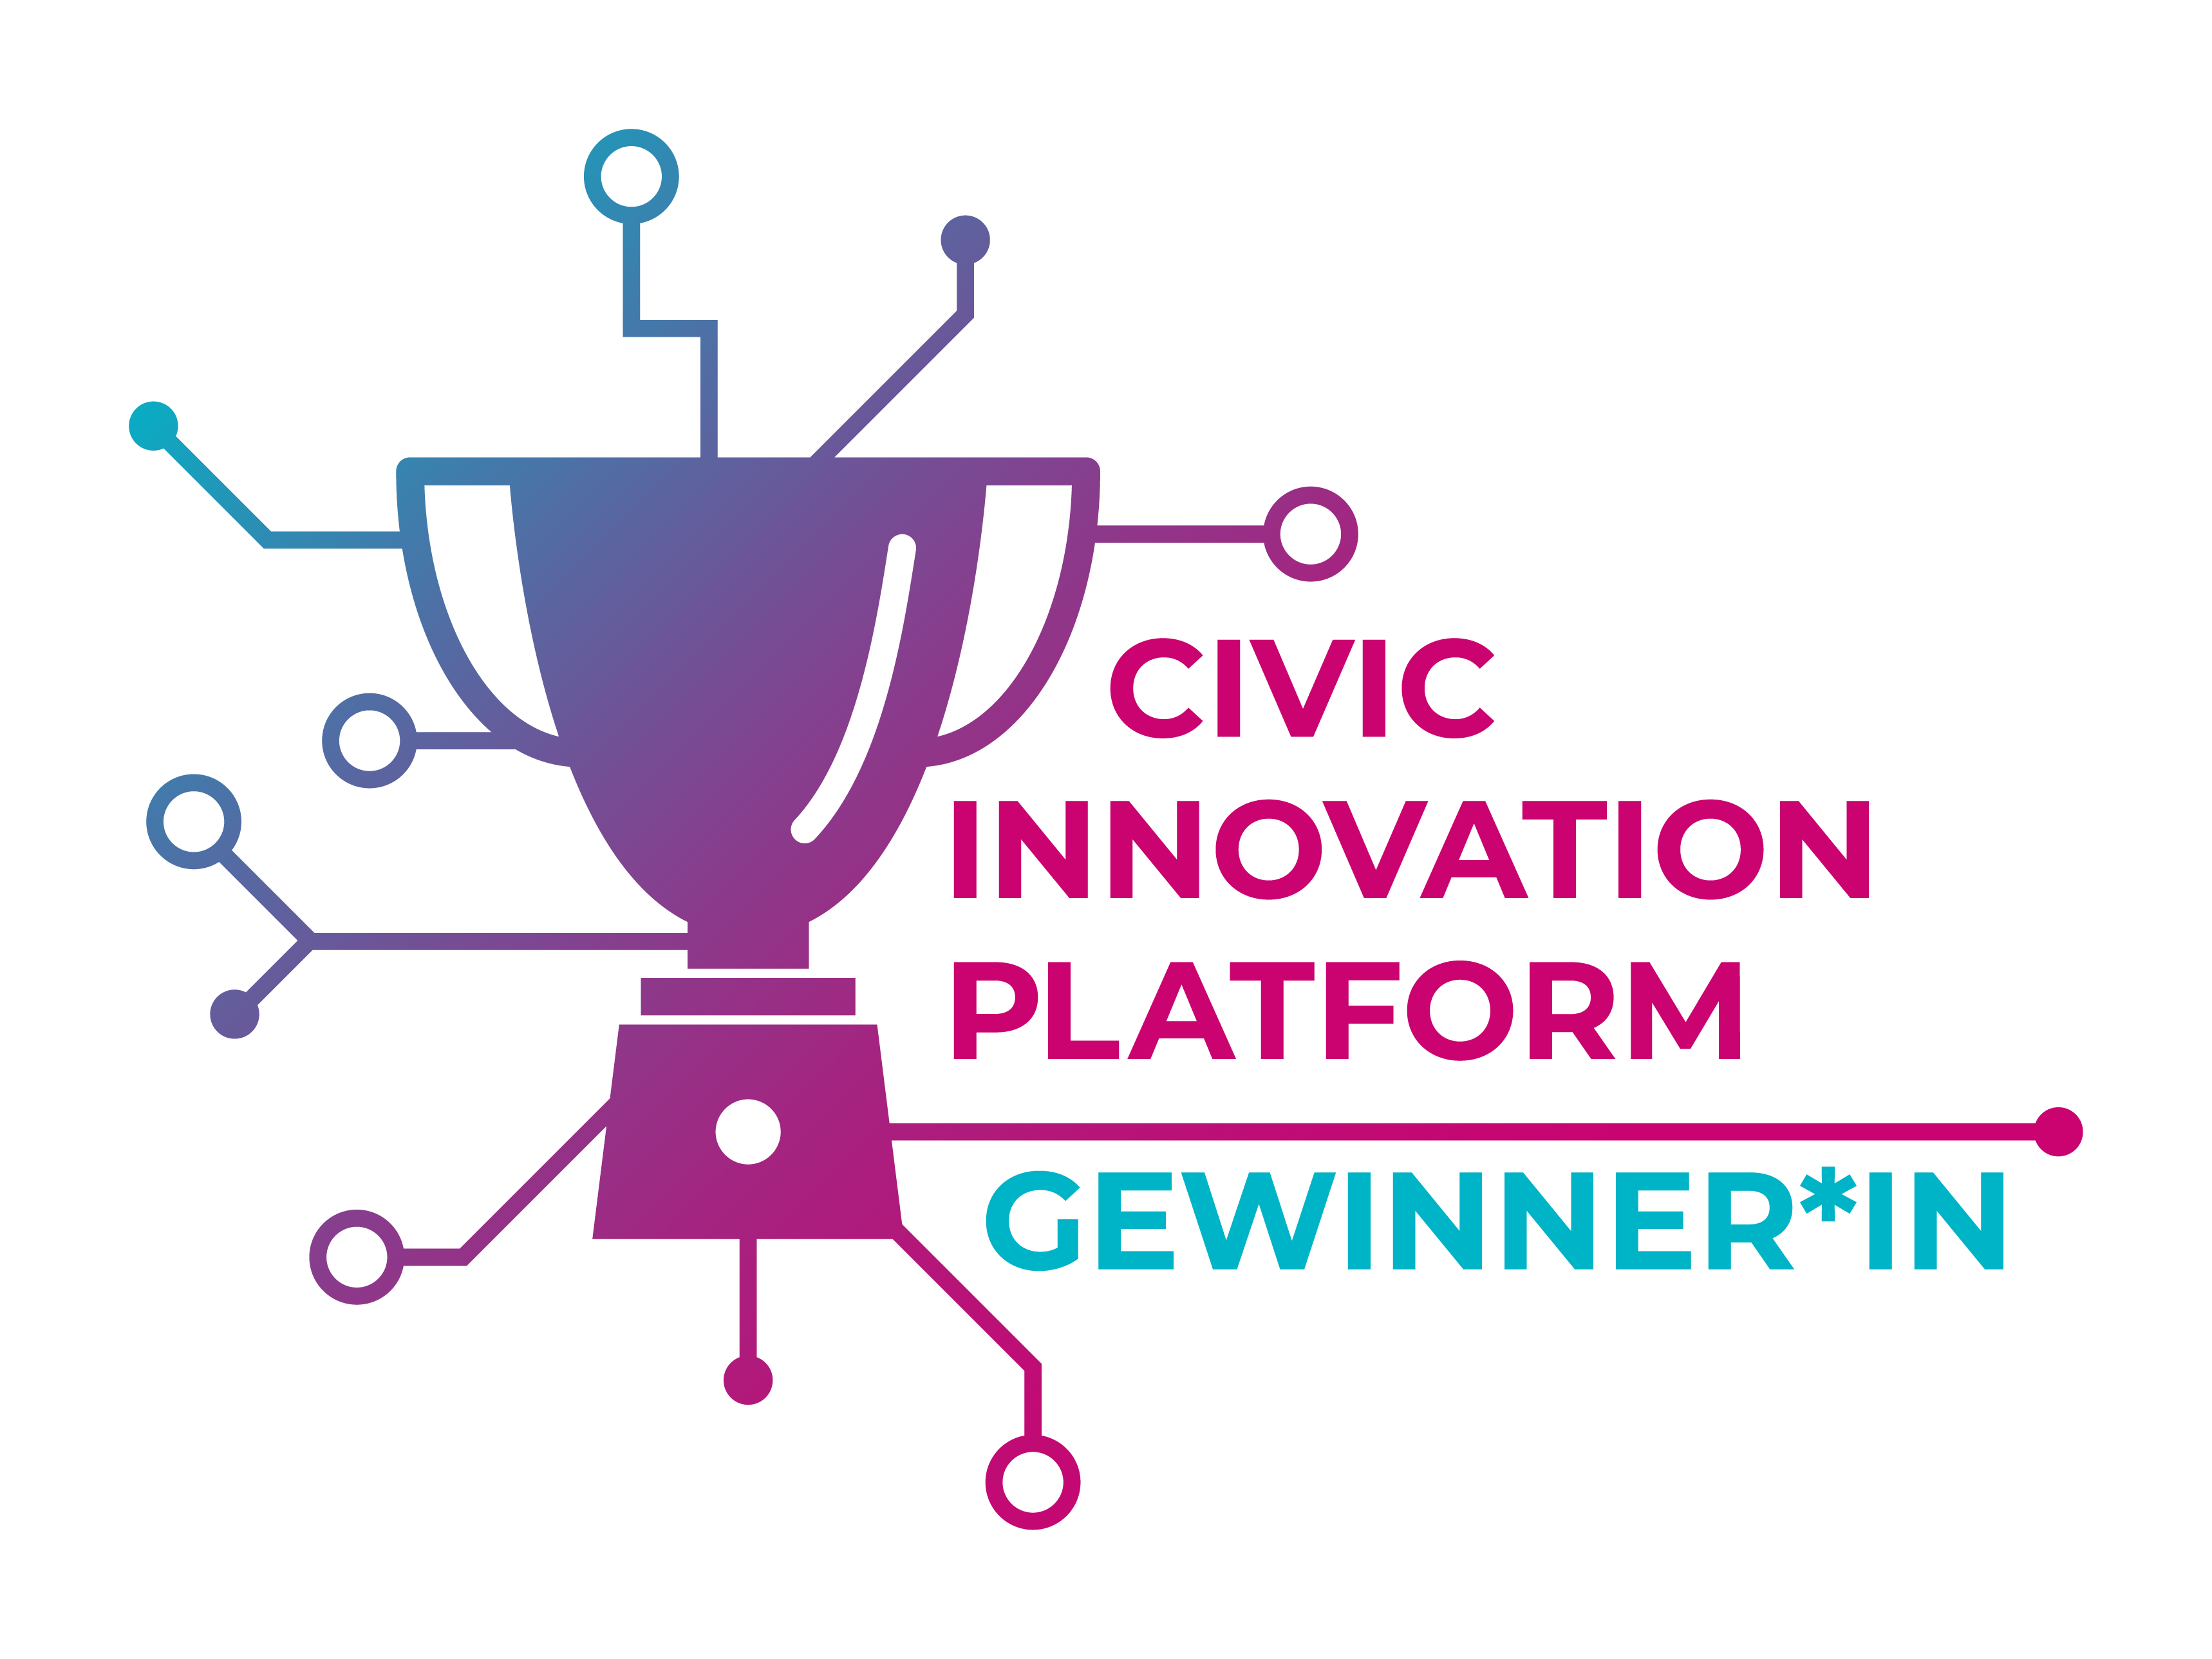 Civic Innovation Platform - Gewinner*in